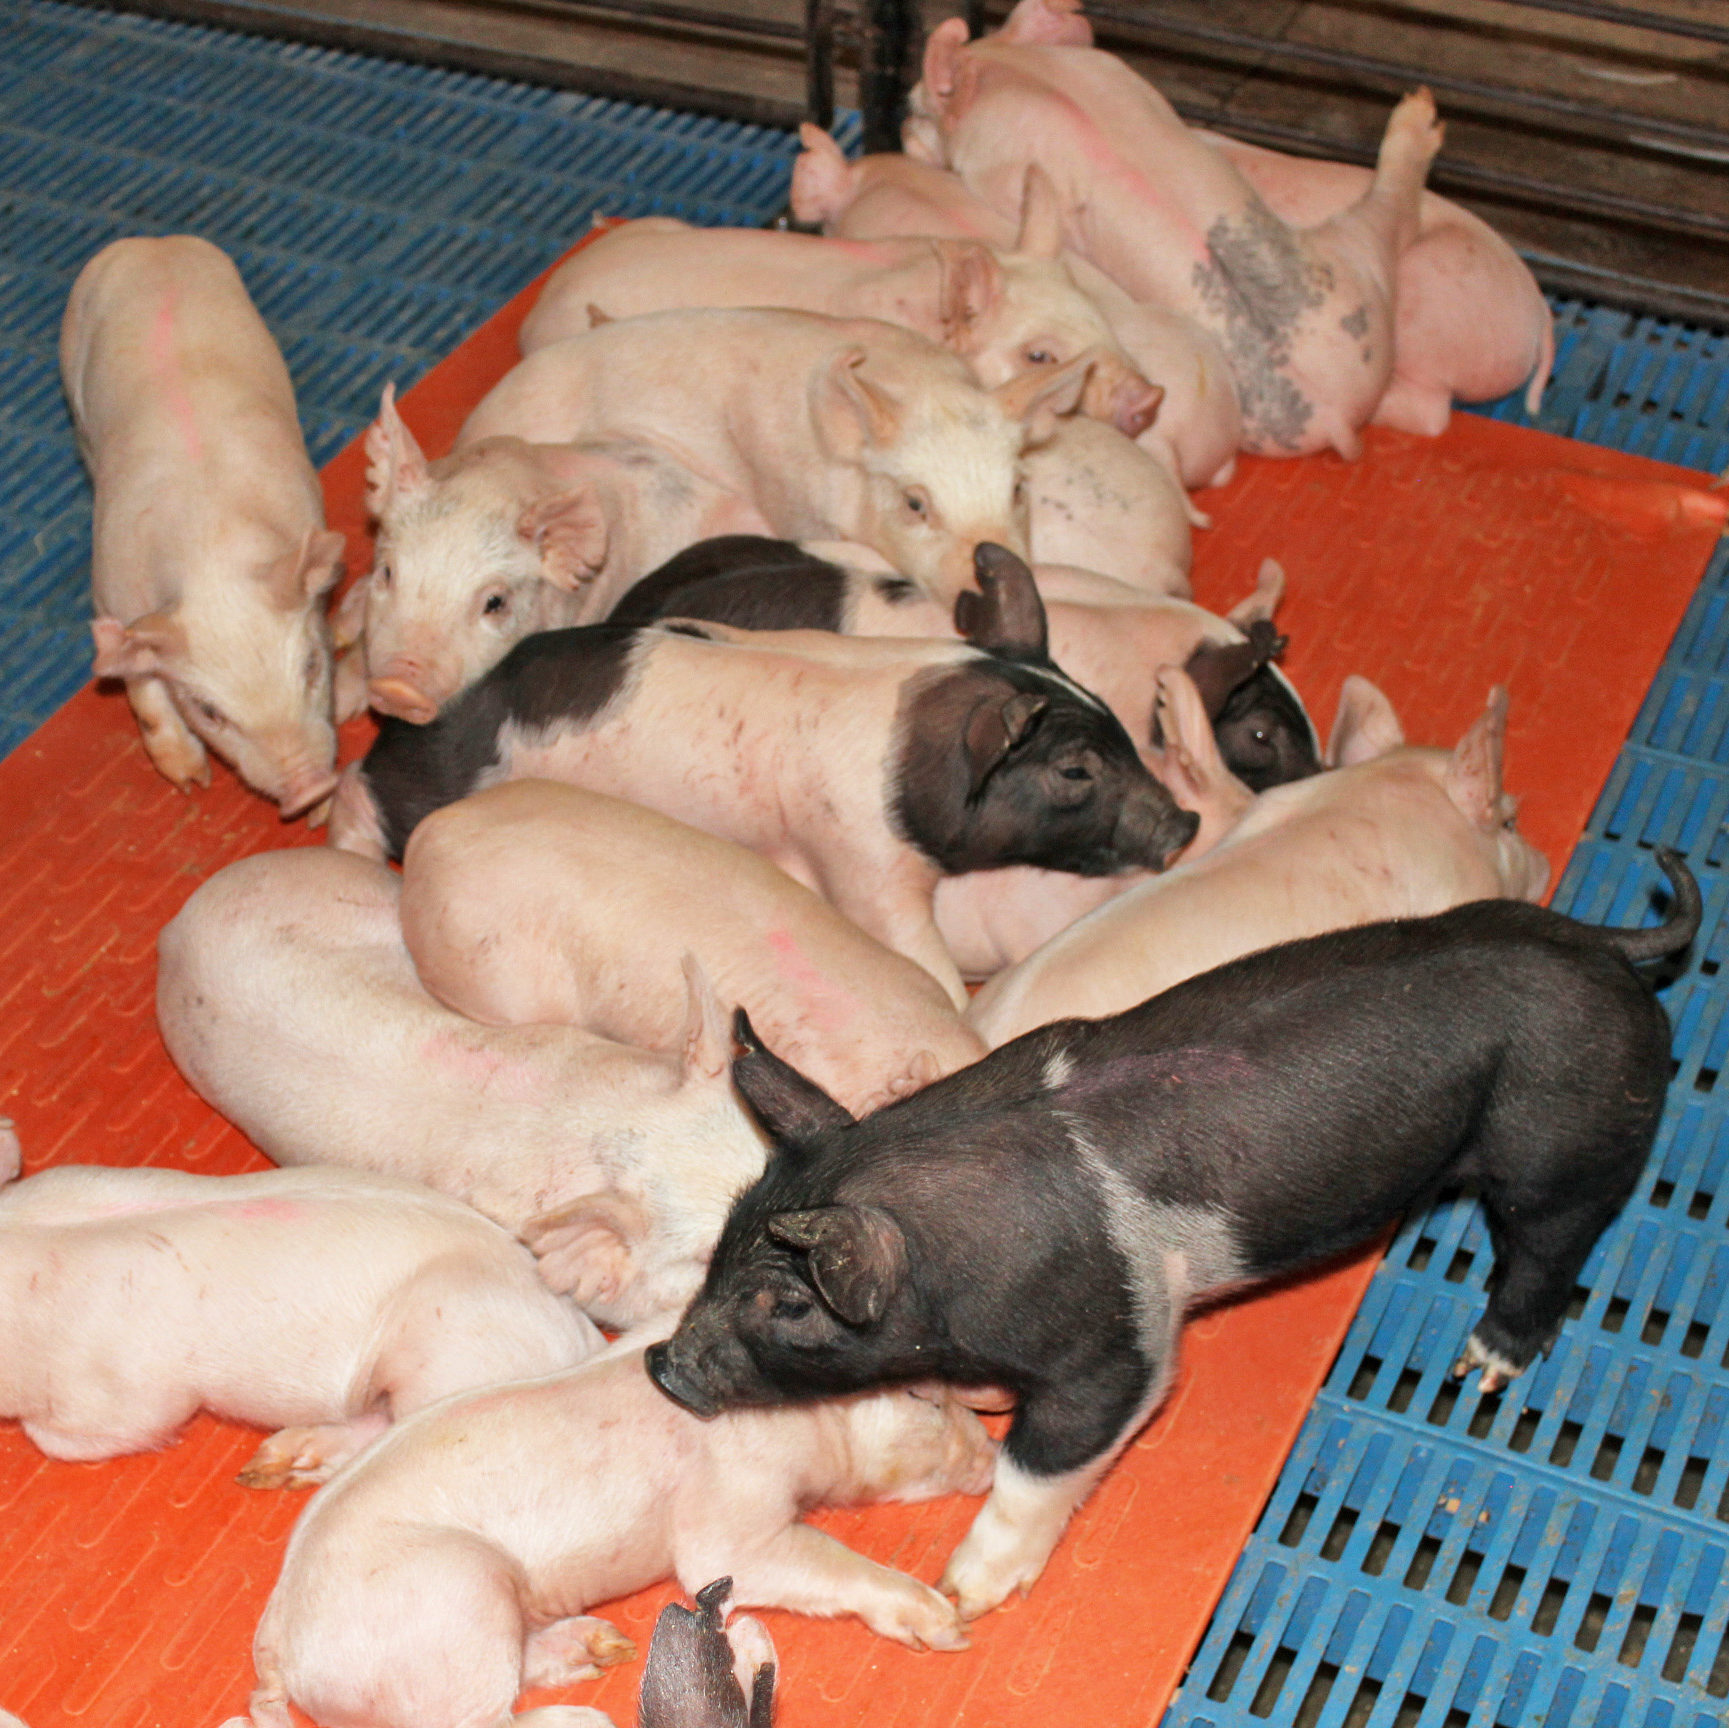 Piglets on a heat mat, image provided by Osborne Stanfield